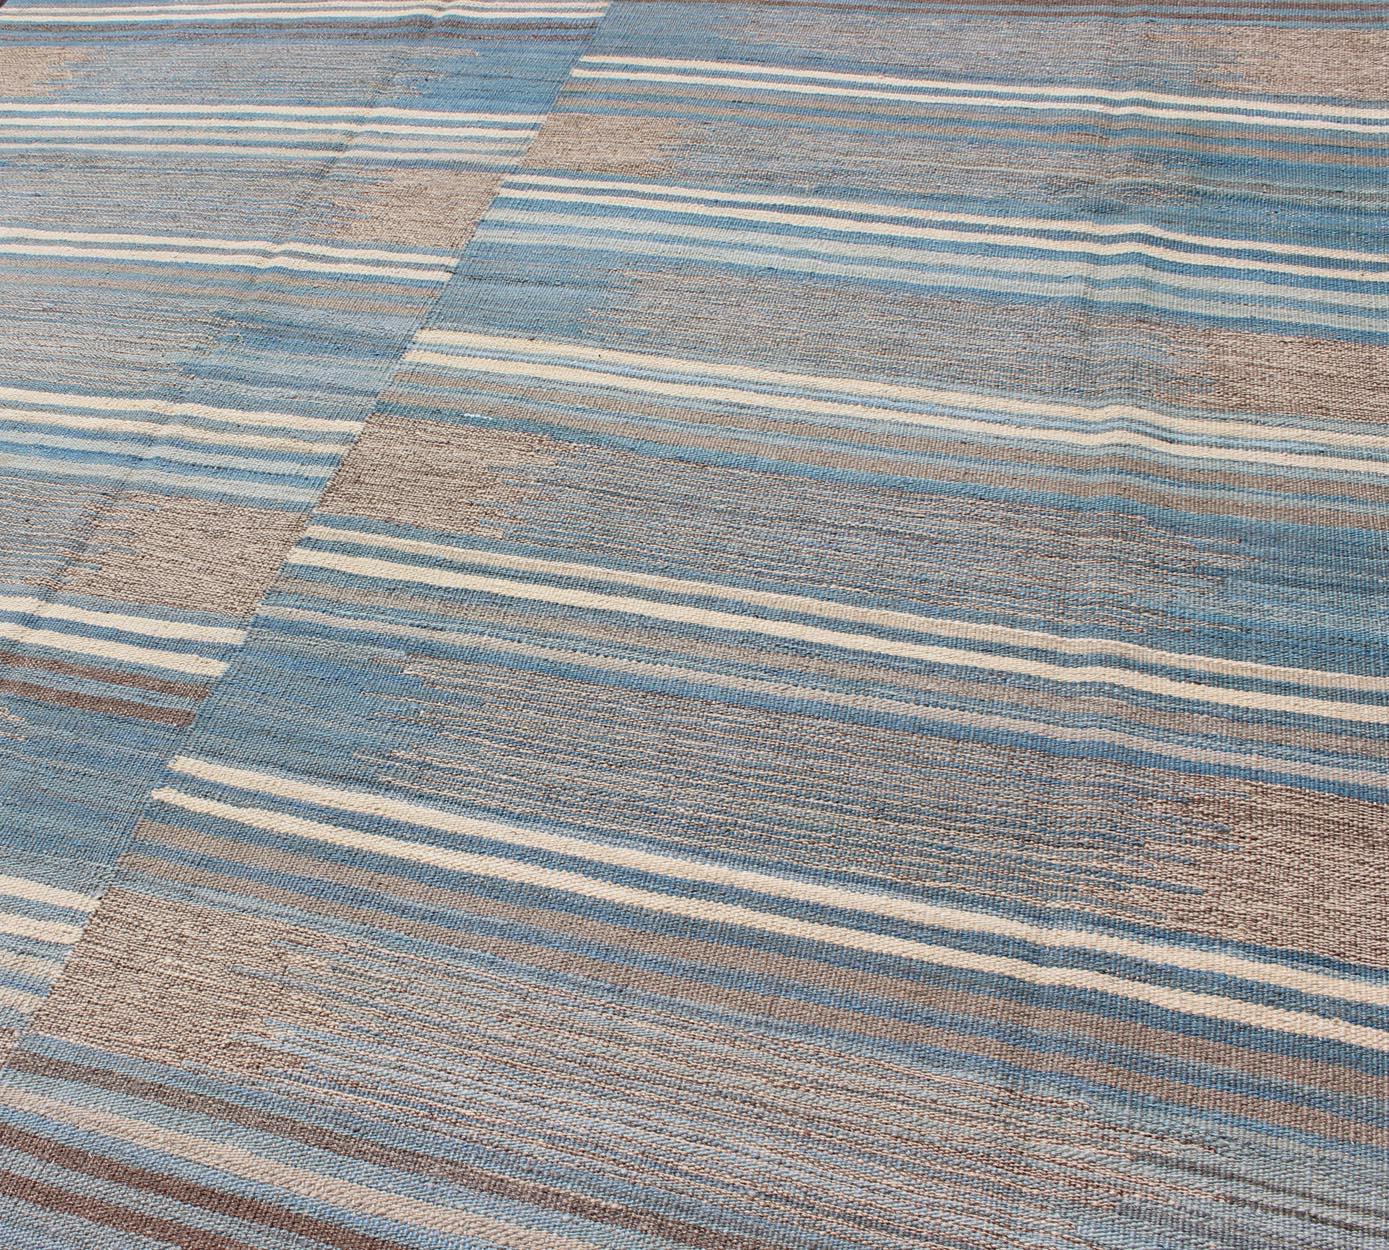 Keivan Woven Arts Multicolor Paneled Flat-Weave Kilim Rug with Modern Design. Keivan Woven Arts/ rug /AFG-14960, country of origin / type: Afghanistan / Kilim. 
Measures: 5'8 x 8'5 
Colorful flat-weave modern Kilim rug with modern design for modern